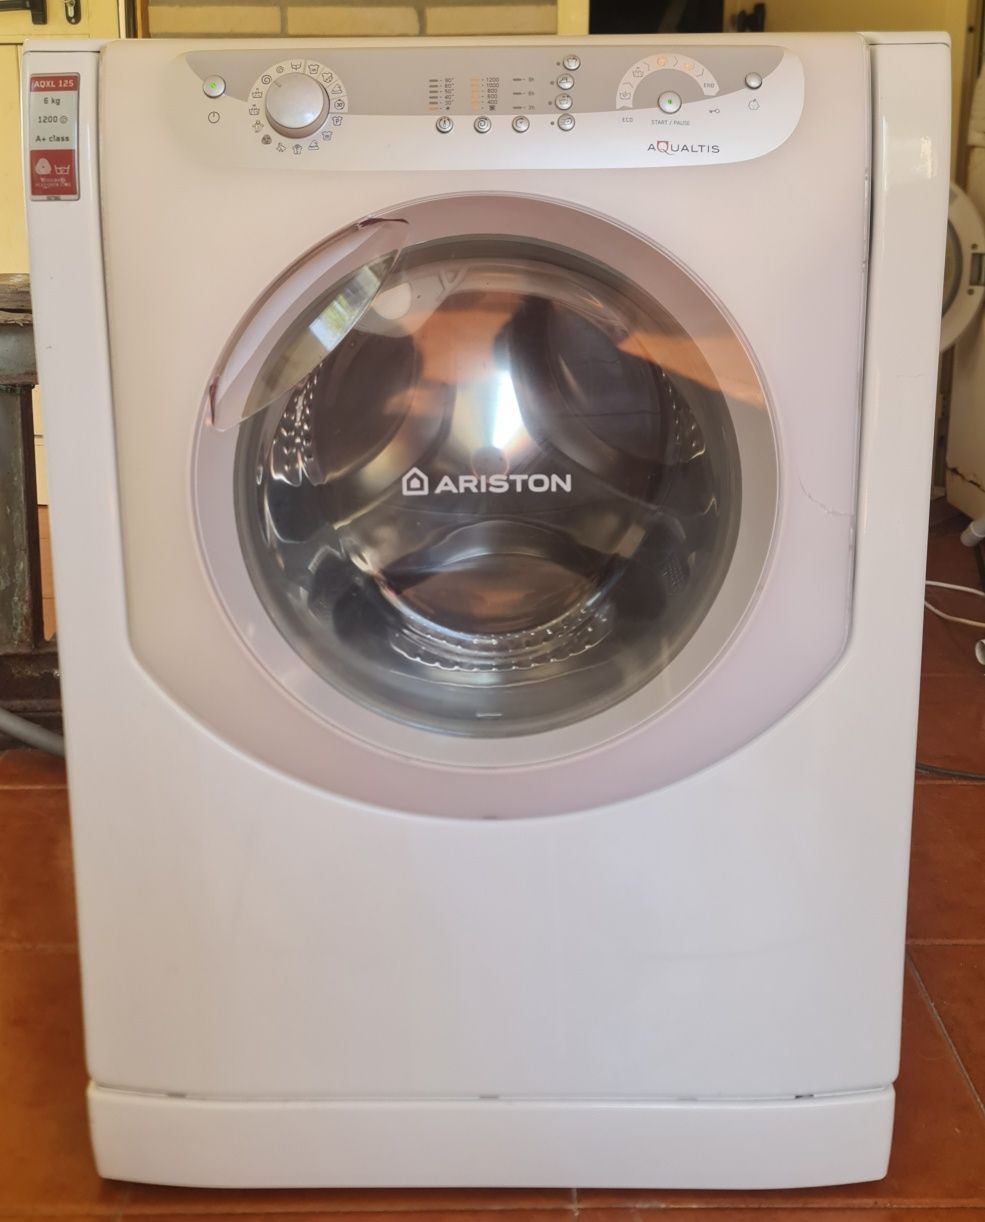 Máquina lavar roupa c/garantia